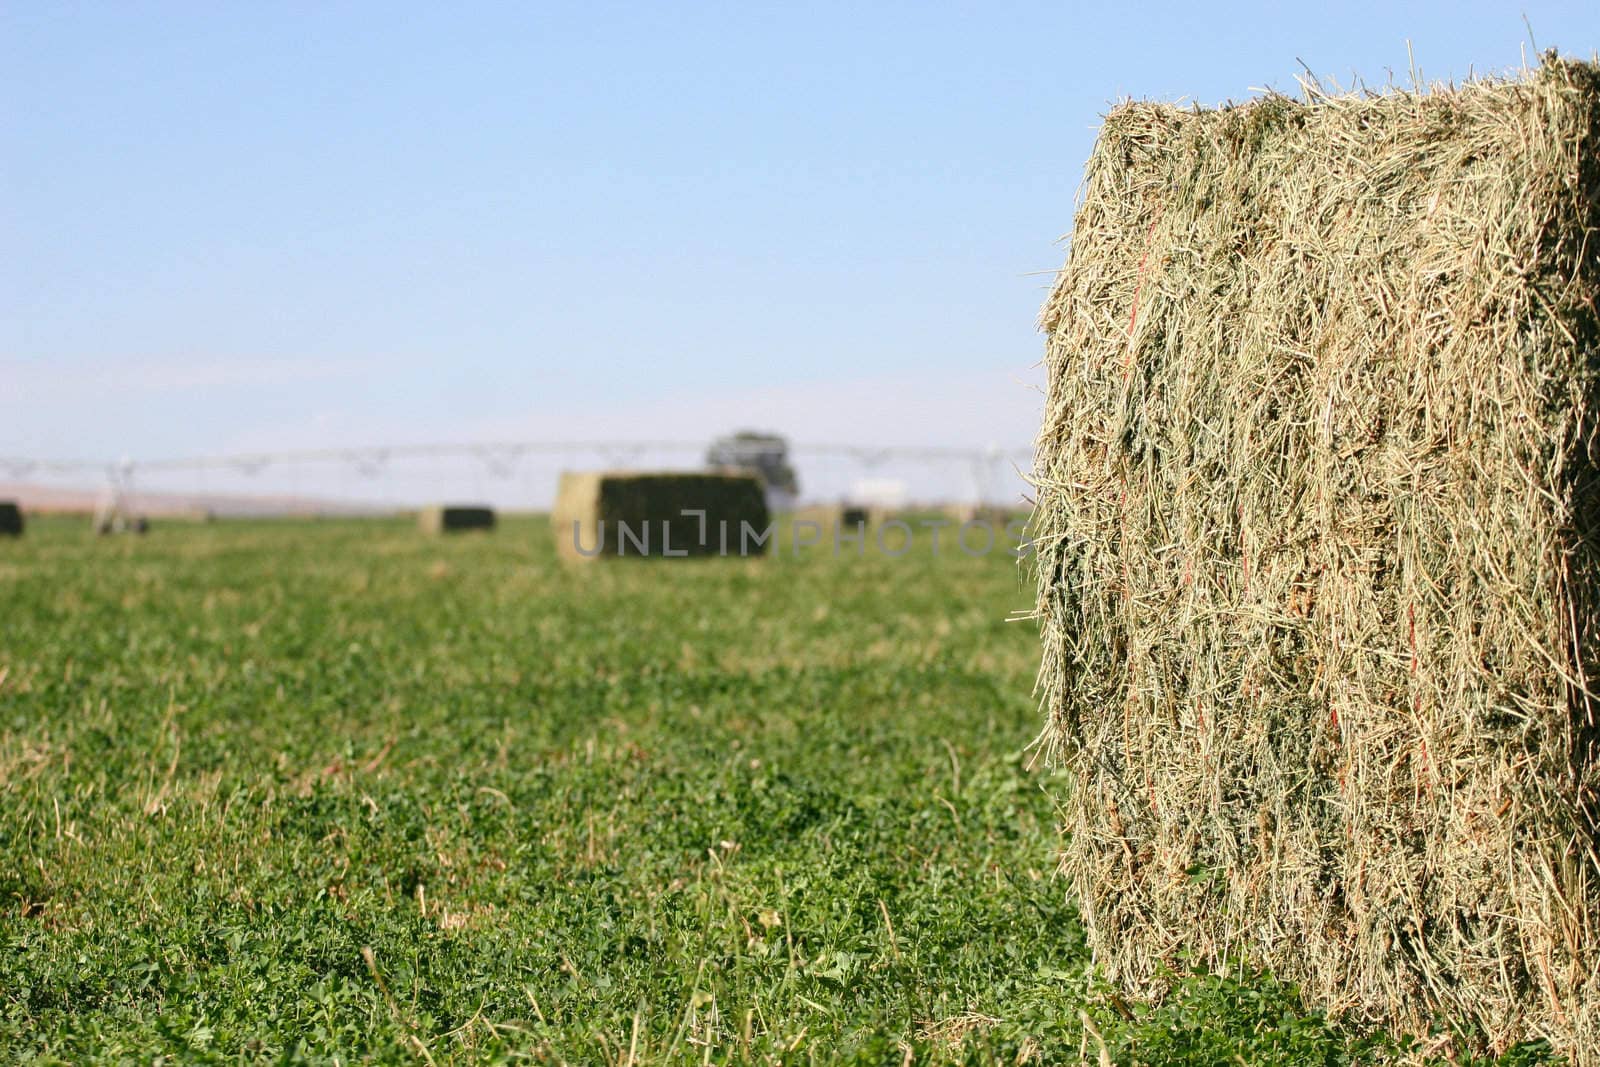 Bales of hay still sitting in field